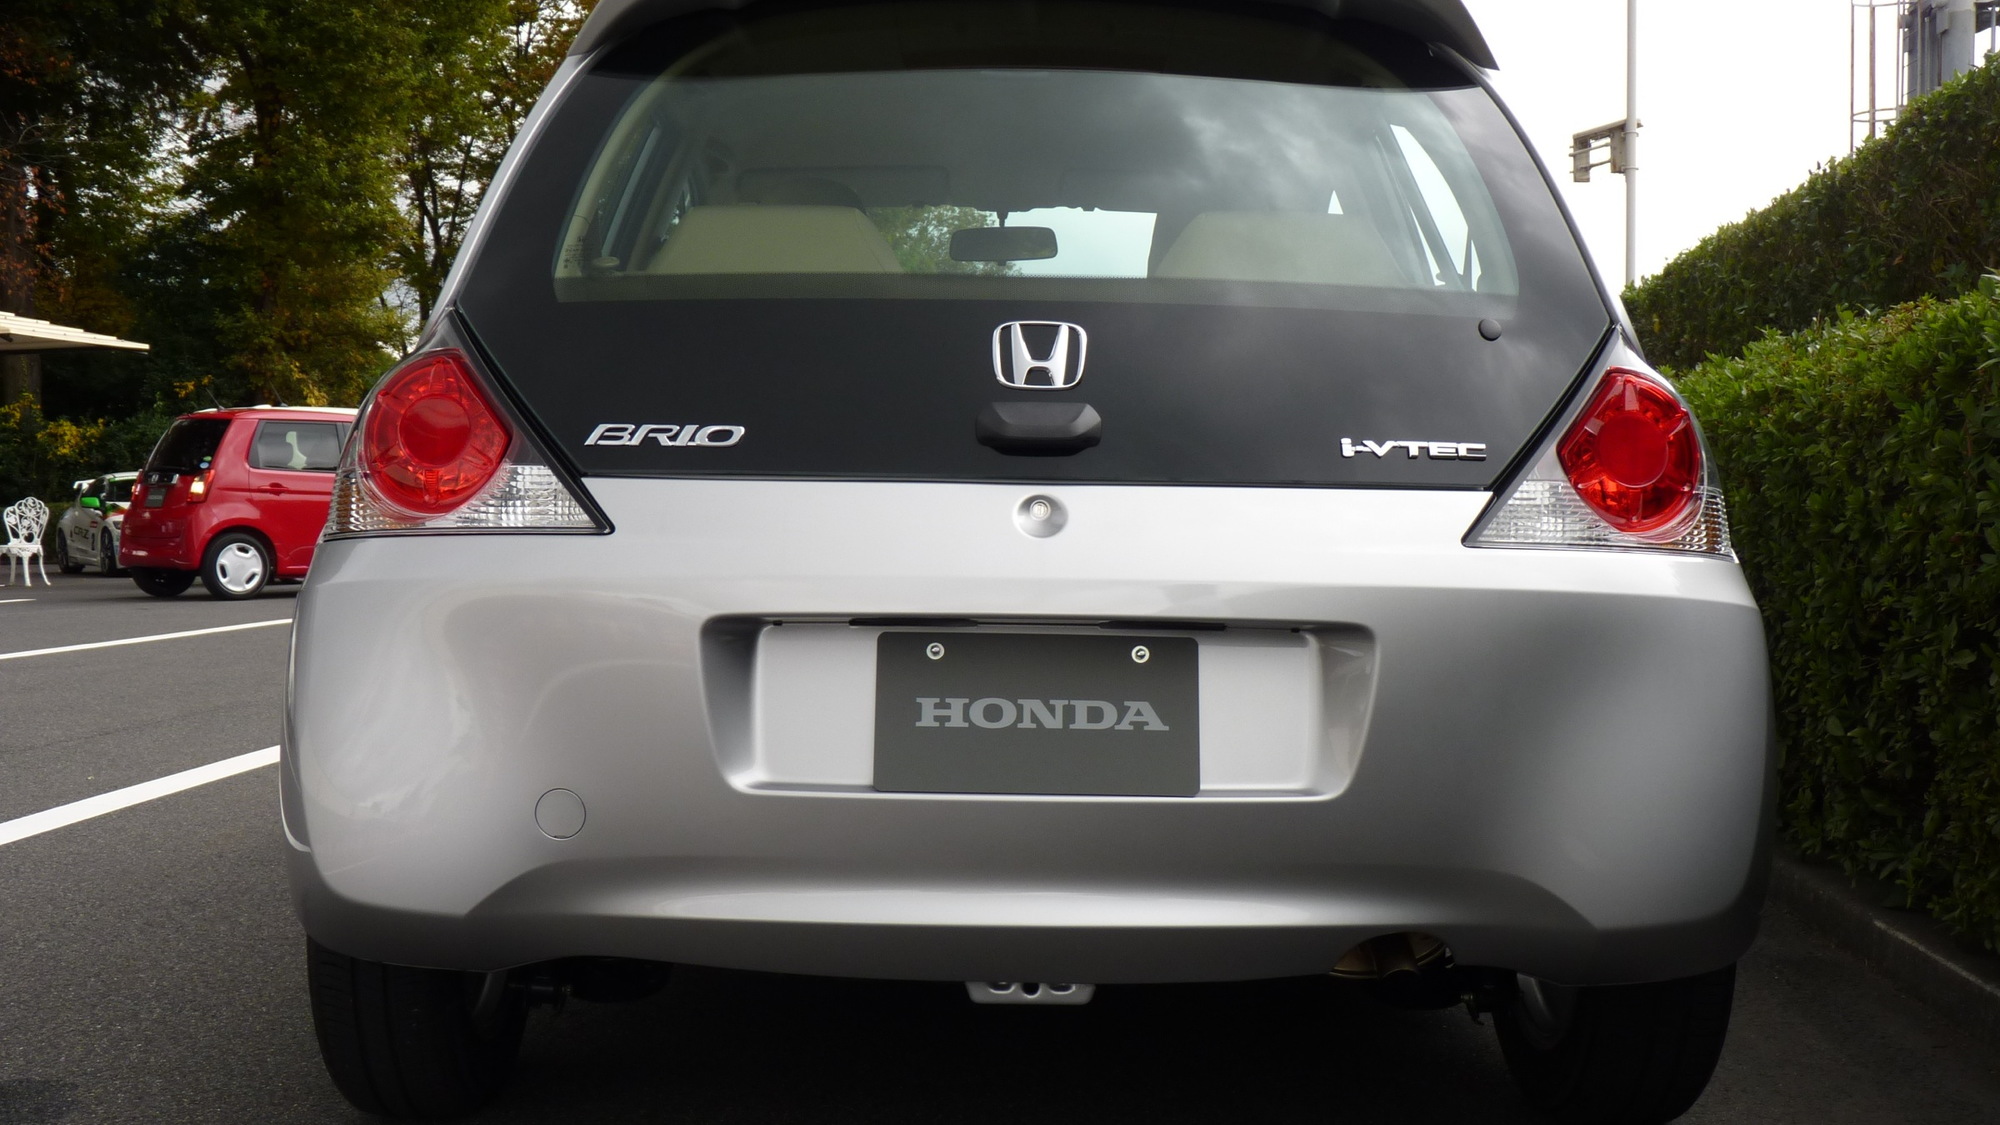 Honda Brio  -  Indonesian-market version  -  Driven, 11/2012